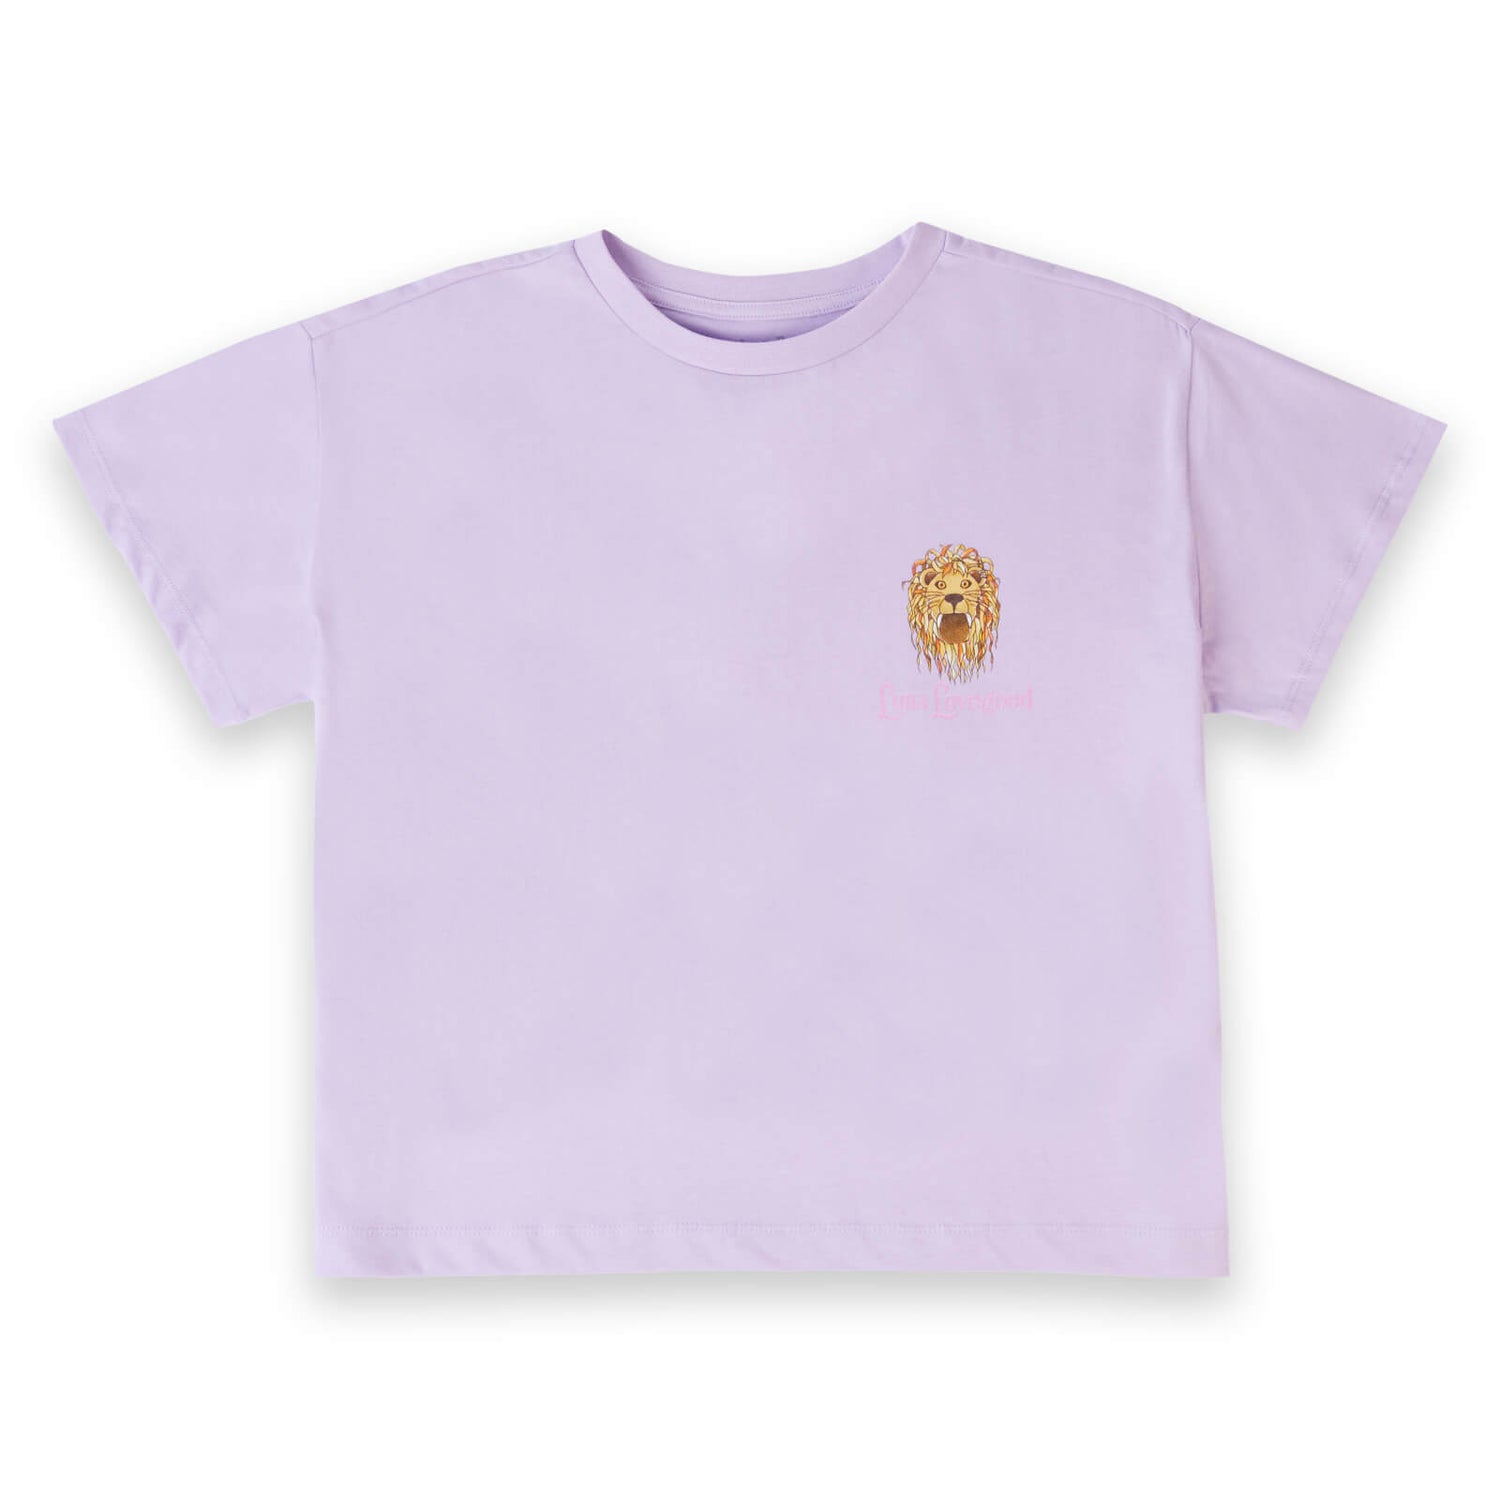 Harry Potter Luna Lovegood Lion Women's Cropped T-Shirt - Lilac